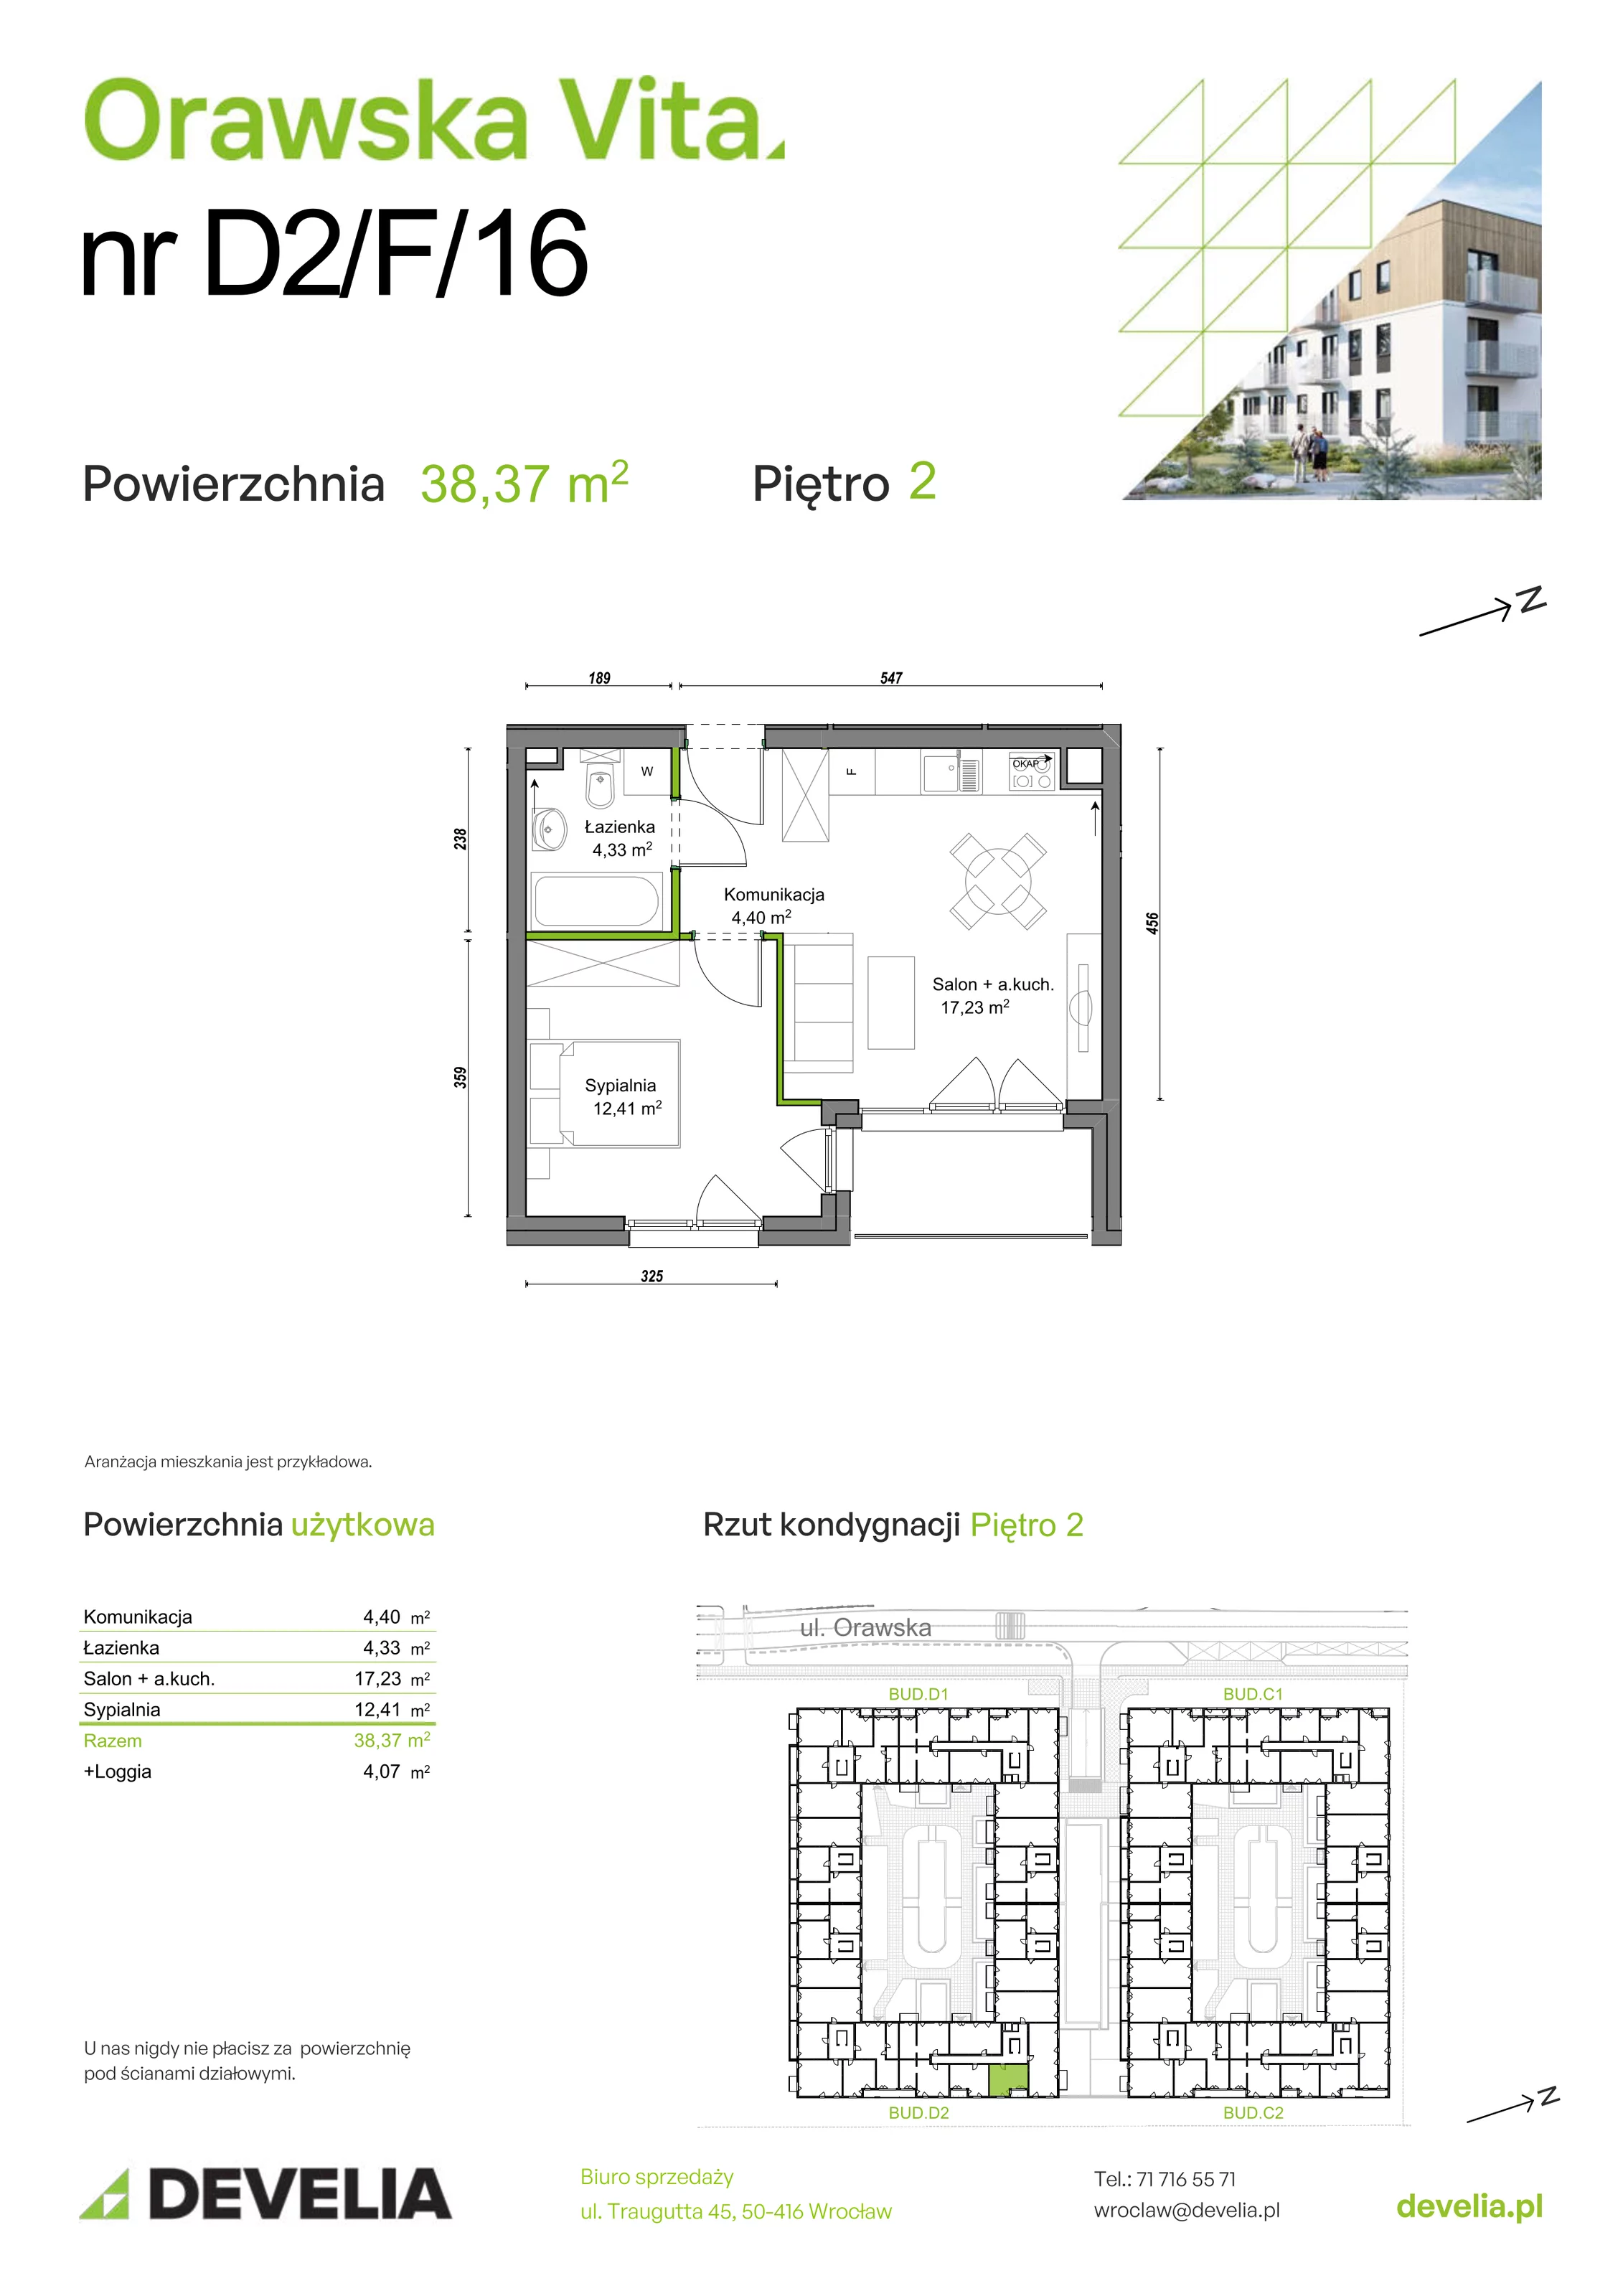 Mieszkanie 38,37 m², piętro 2, oferta nr D2/F/16, Orawska Vita, Wrocław, Ołtaszyn, Krzyki, ul. Orawska 73